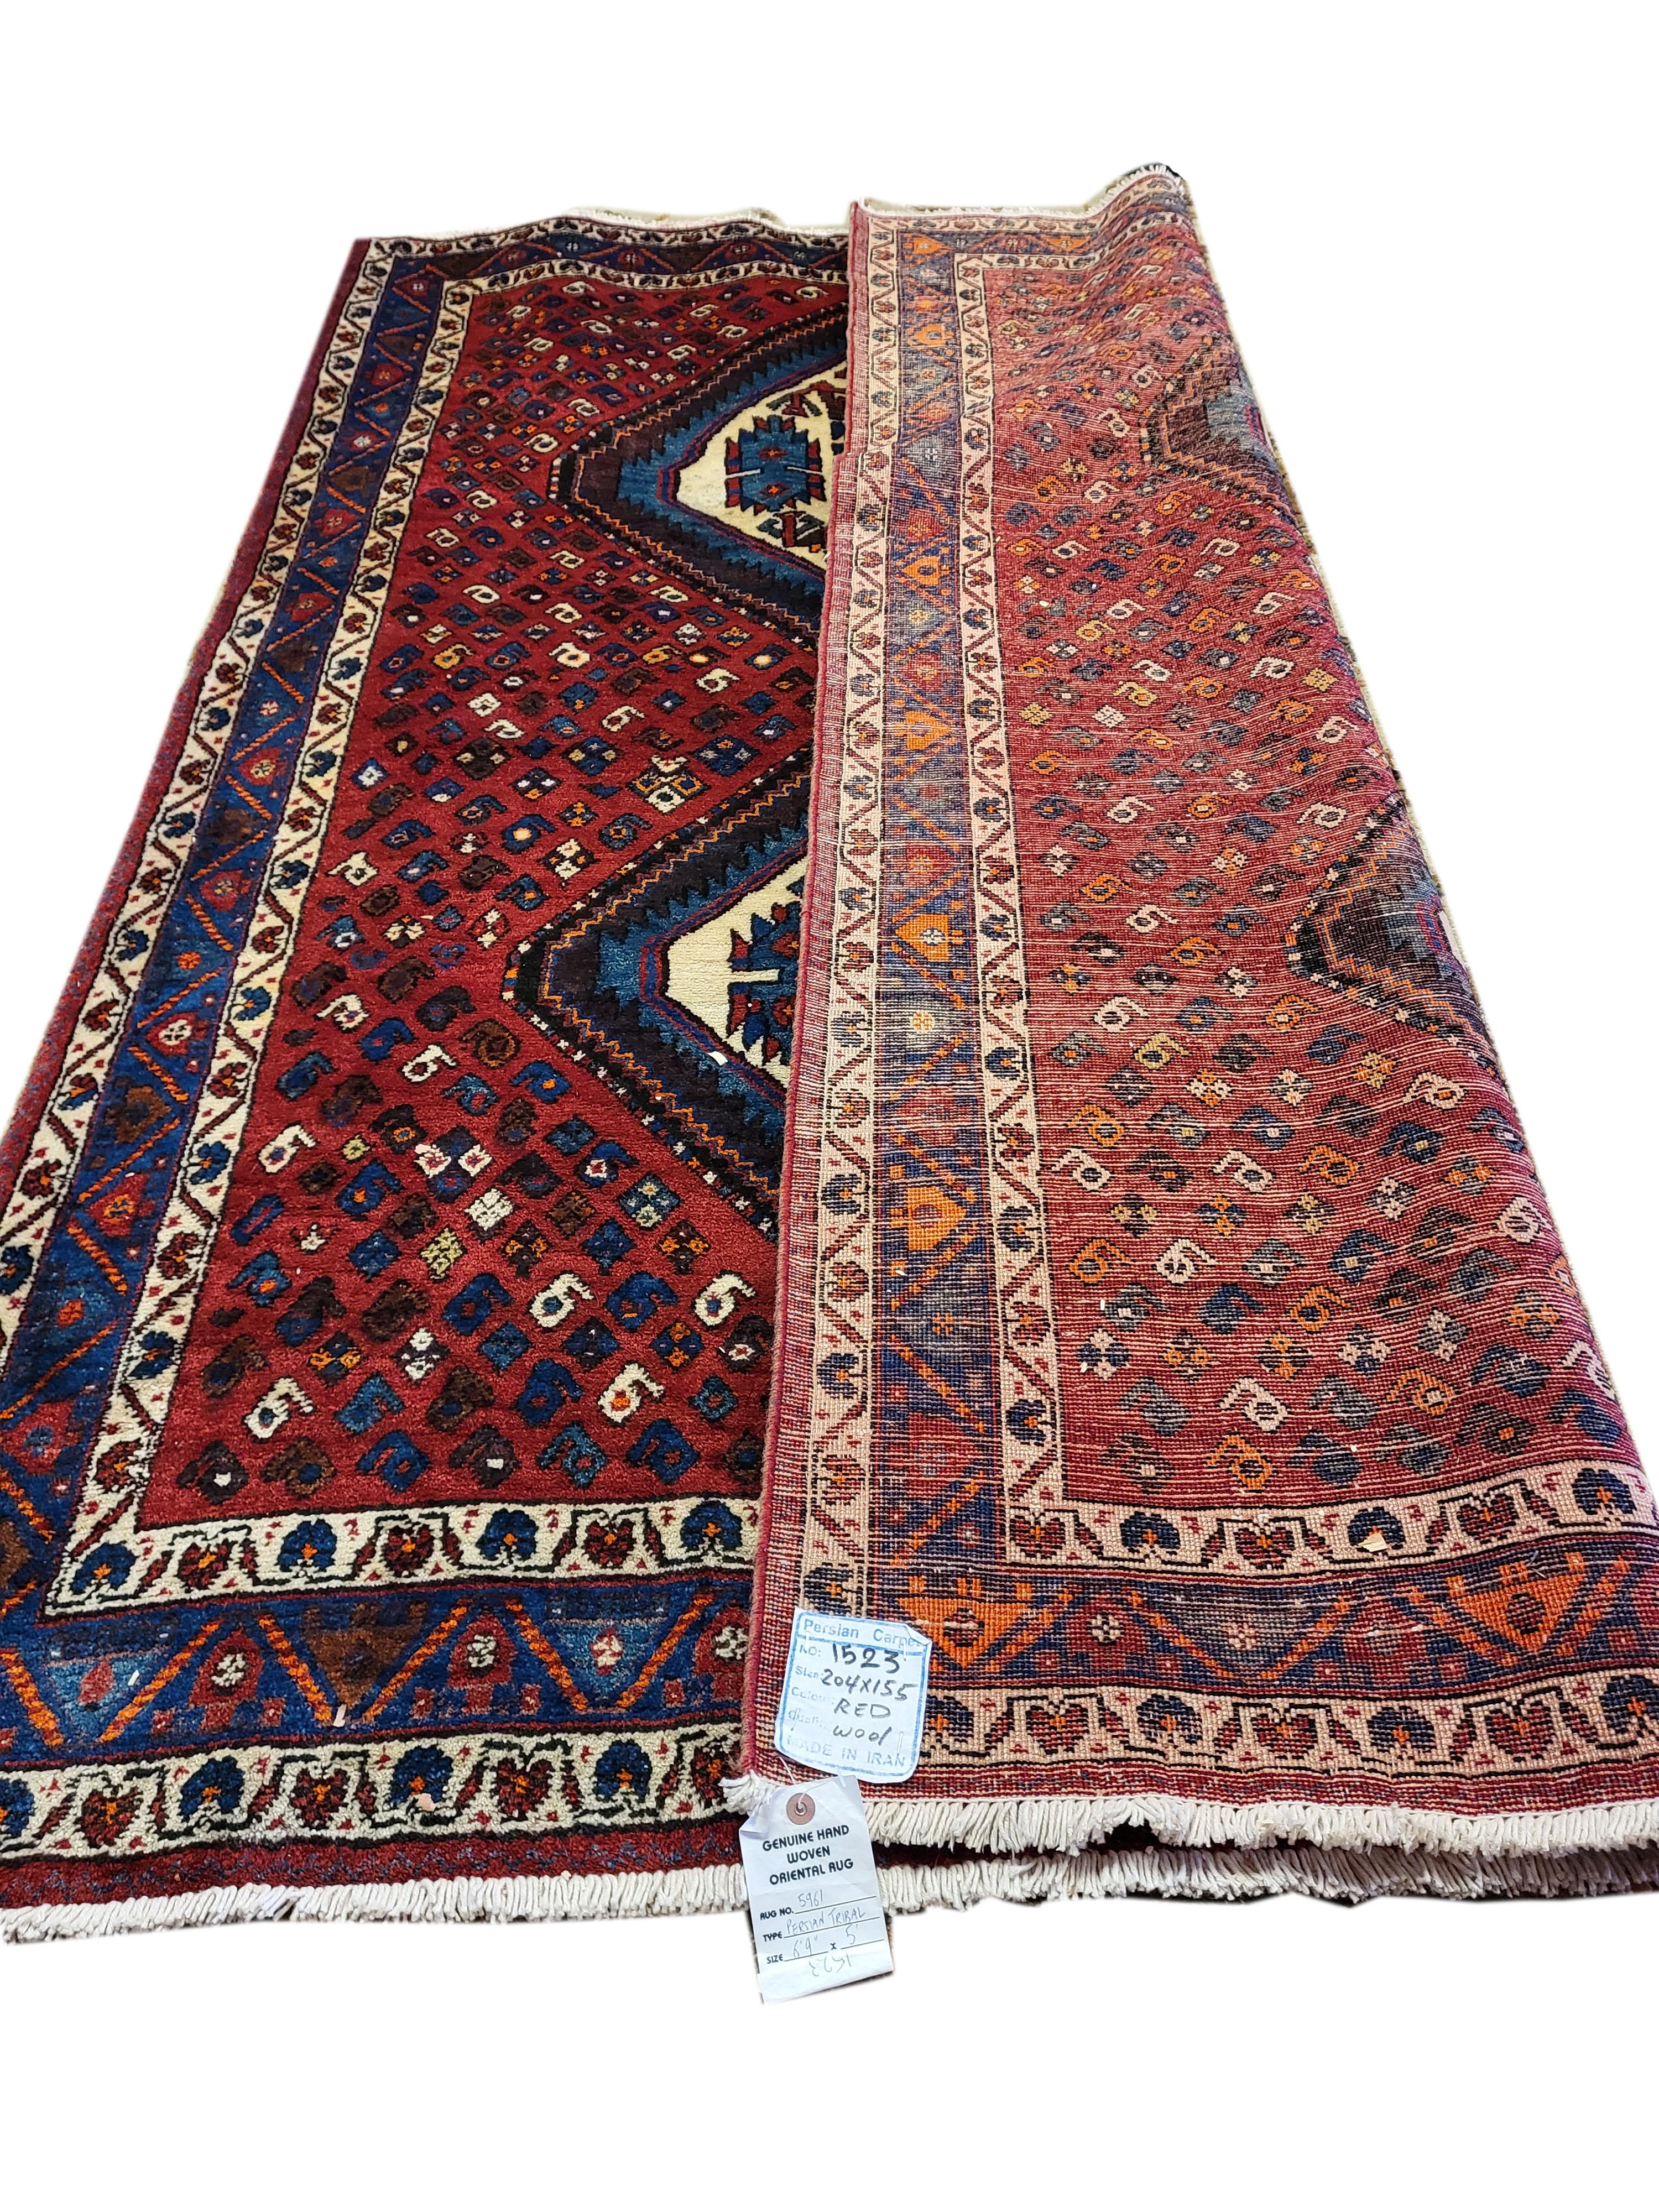 5'x7' Antique Sirjan / Afshar - Tribal Persian Rug - Rust / Cream / Blue In Good Condition For Sale In Blacksburg, VA